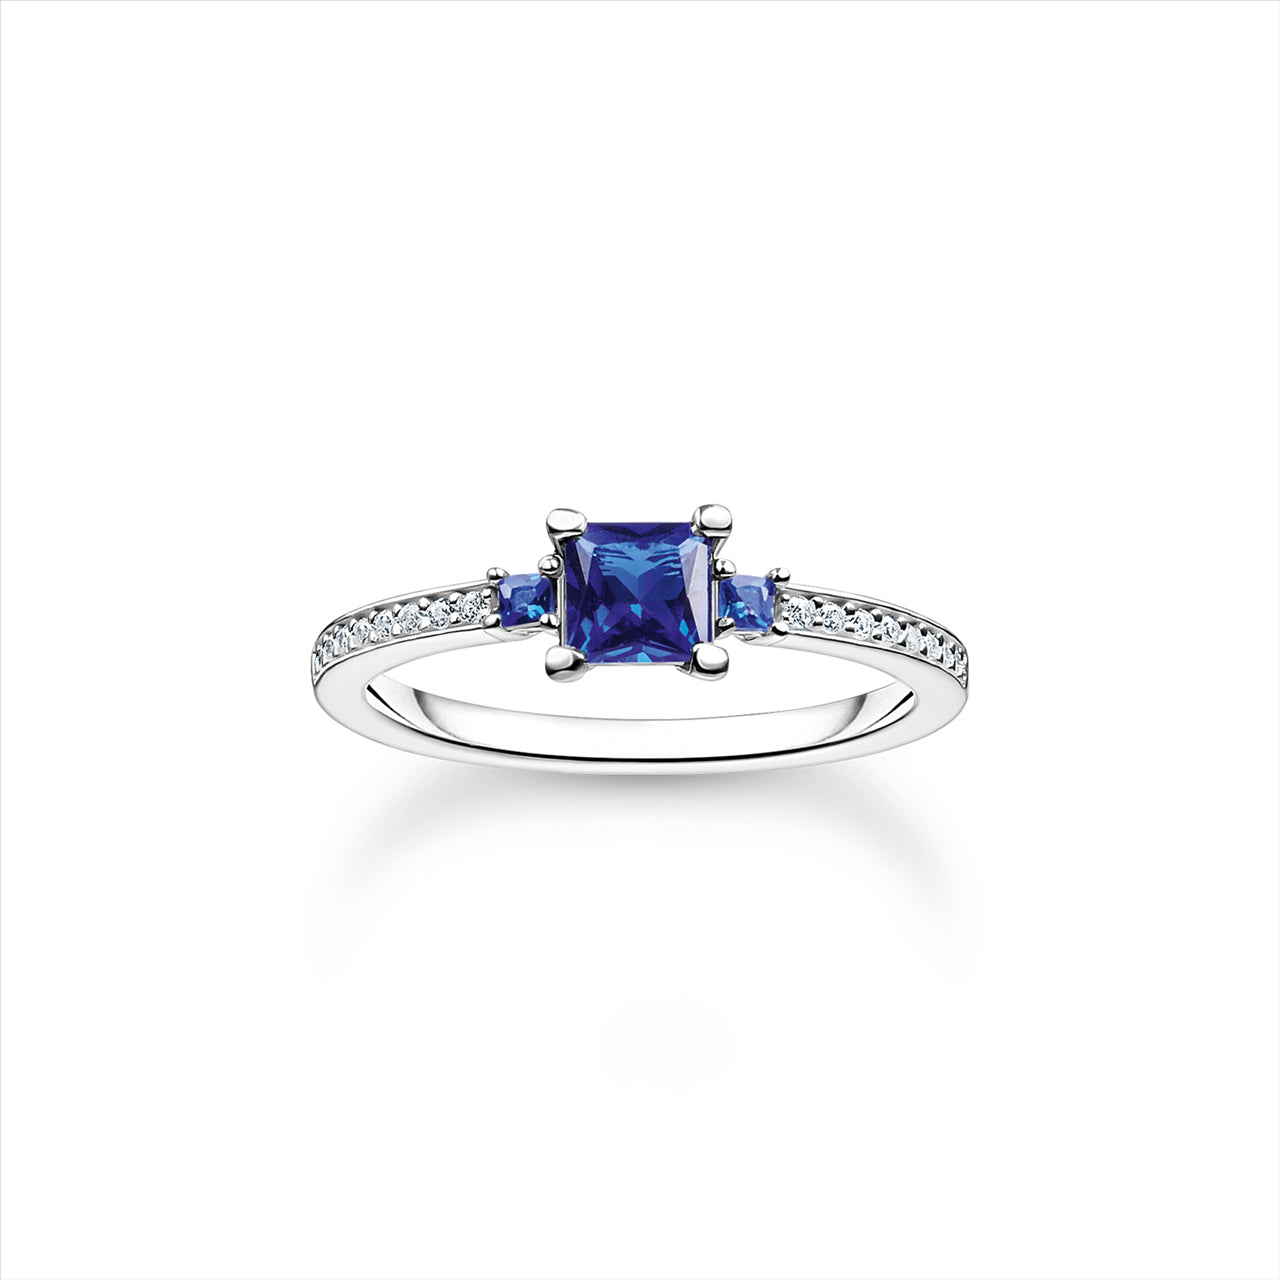 Thomas Sabo Princess Blue And White Stone Ring